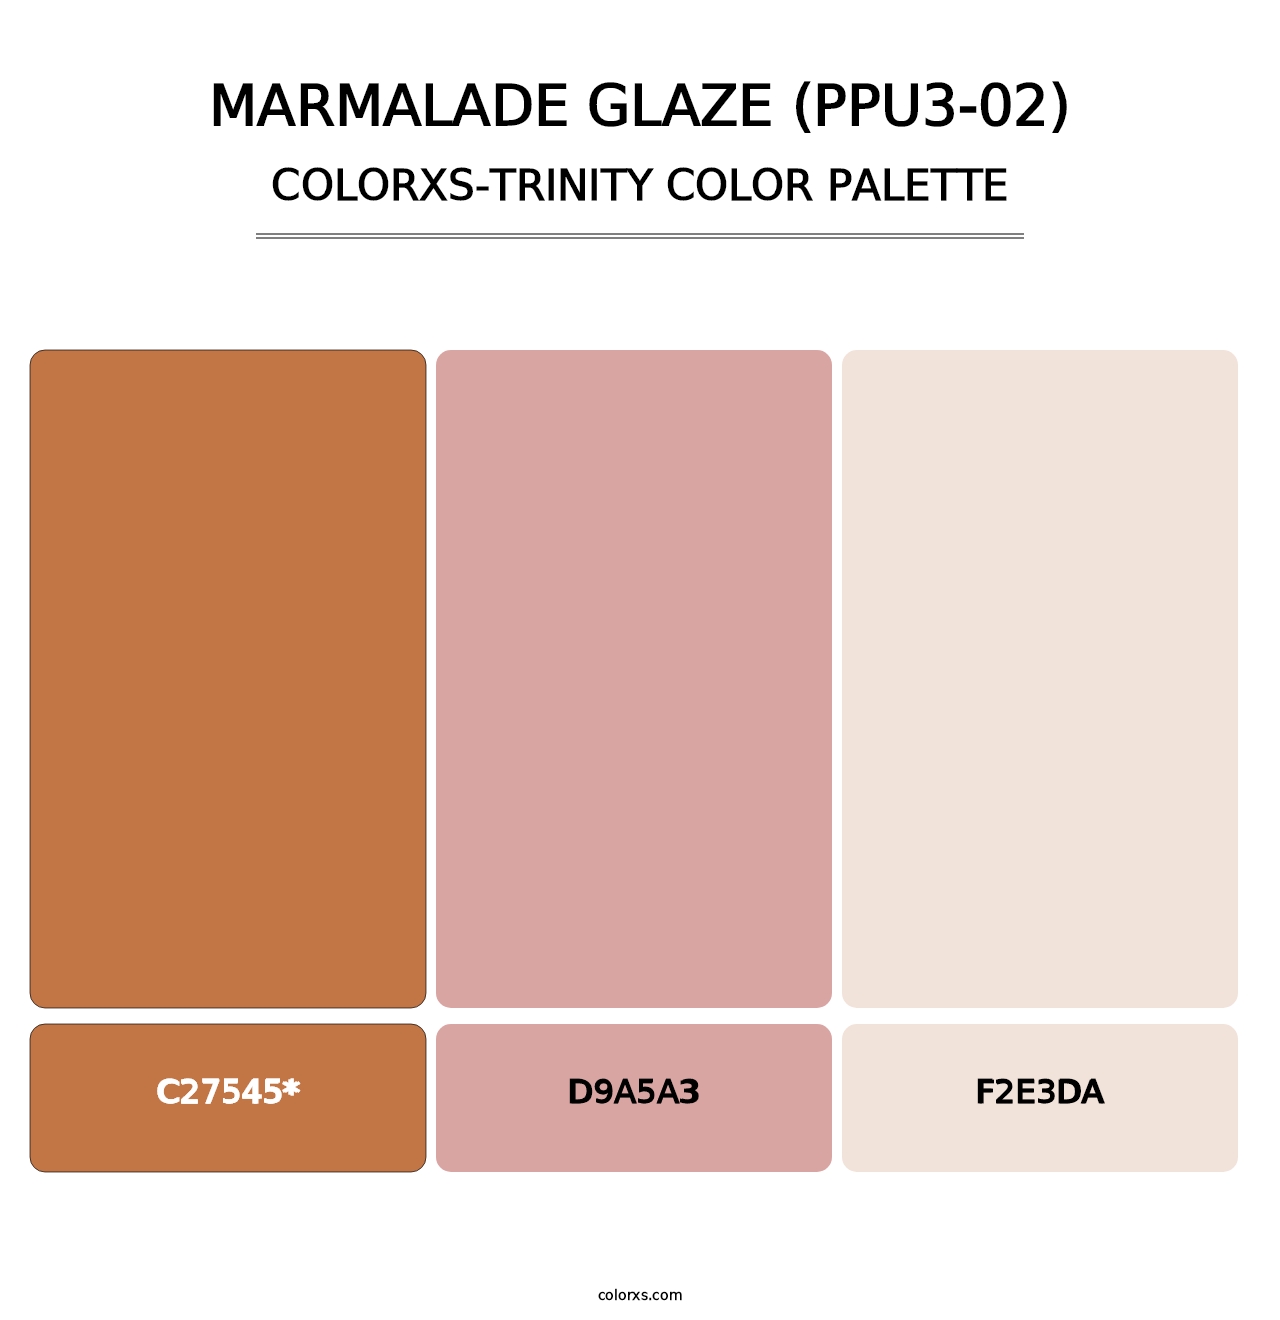 Marmalade Glaze (PPU3-02) - Colorxs Trinity Palette